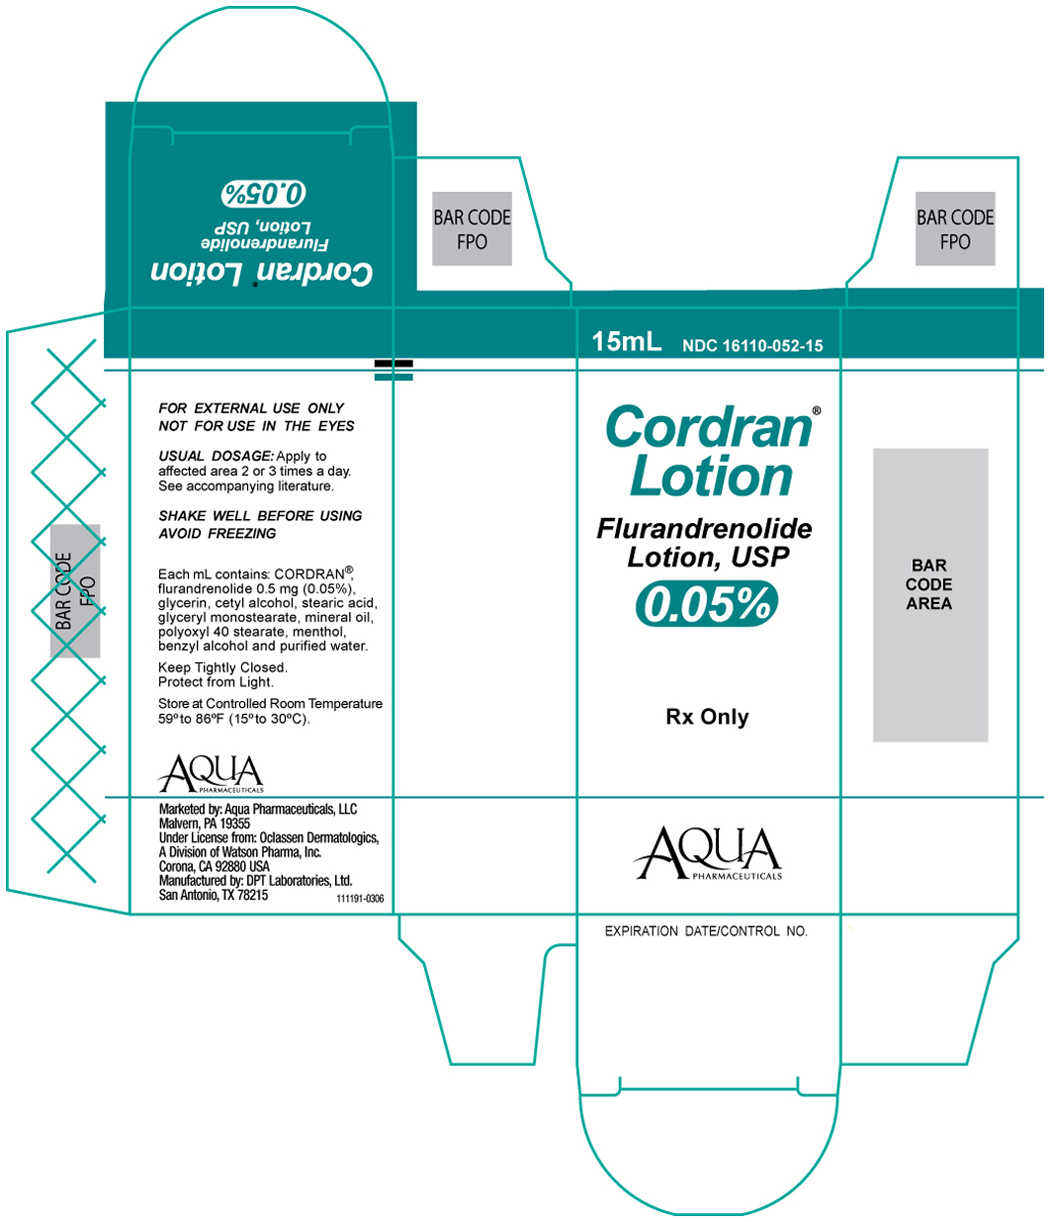 Cordran® Lotion Flurandrenolide Lotion, USP
15 mL Carton 
NDC 16110-052-15